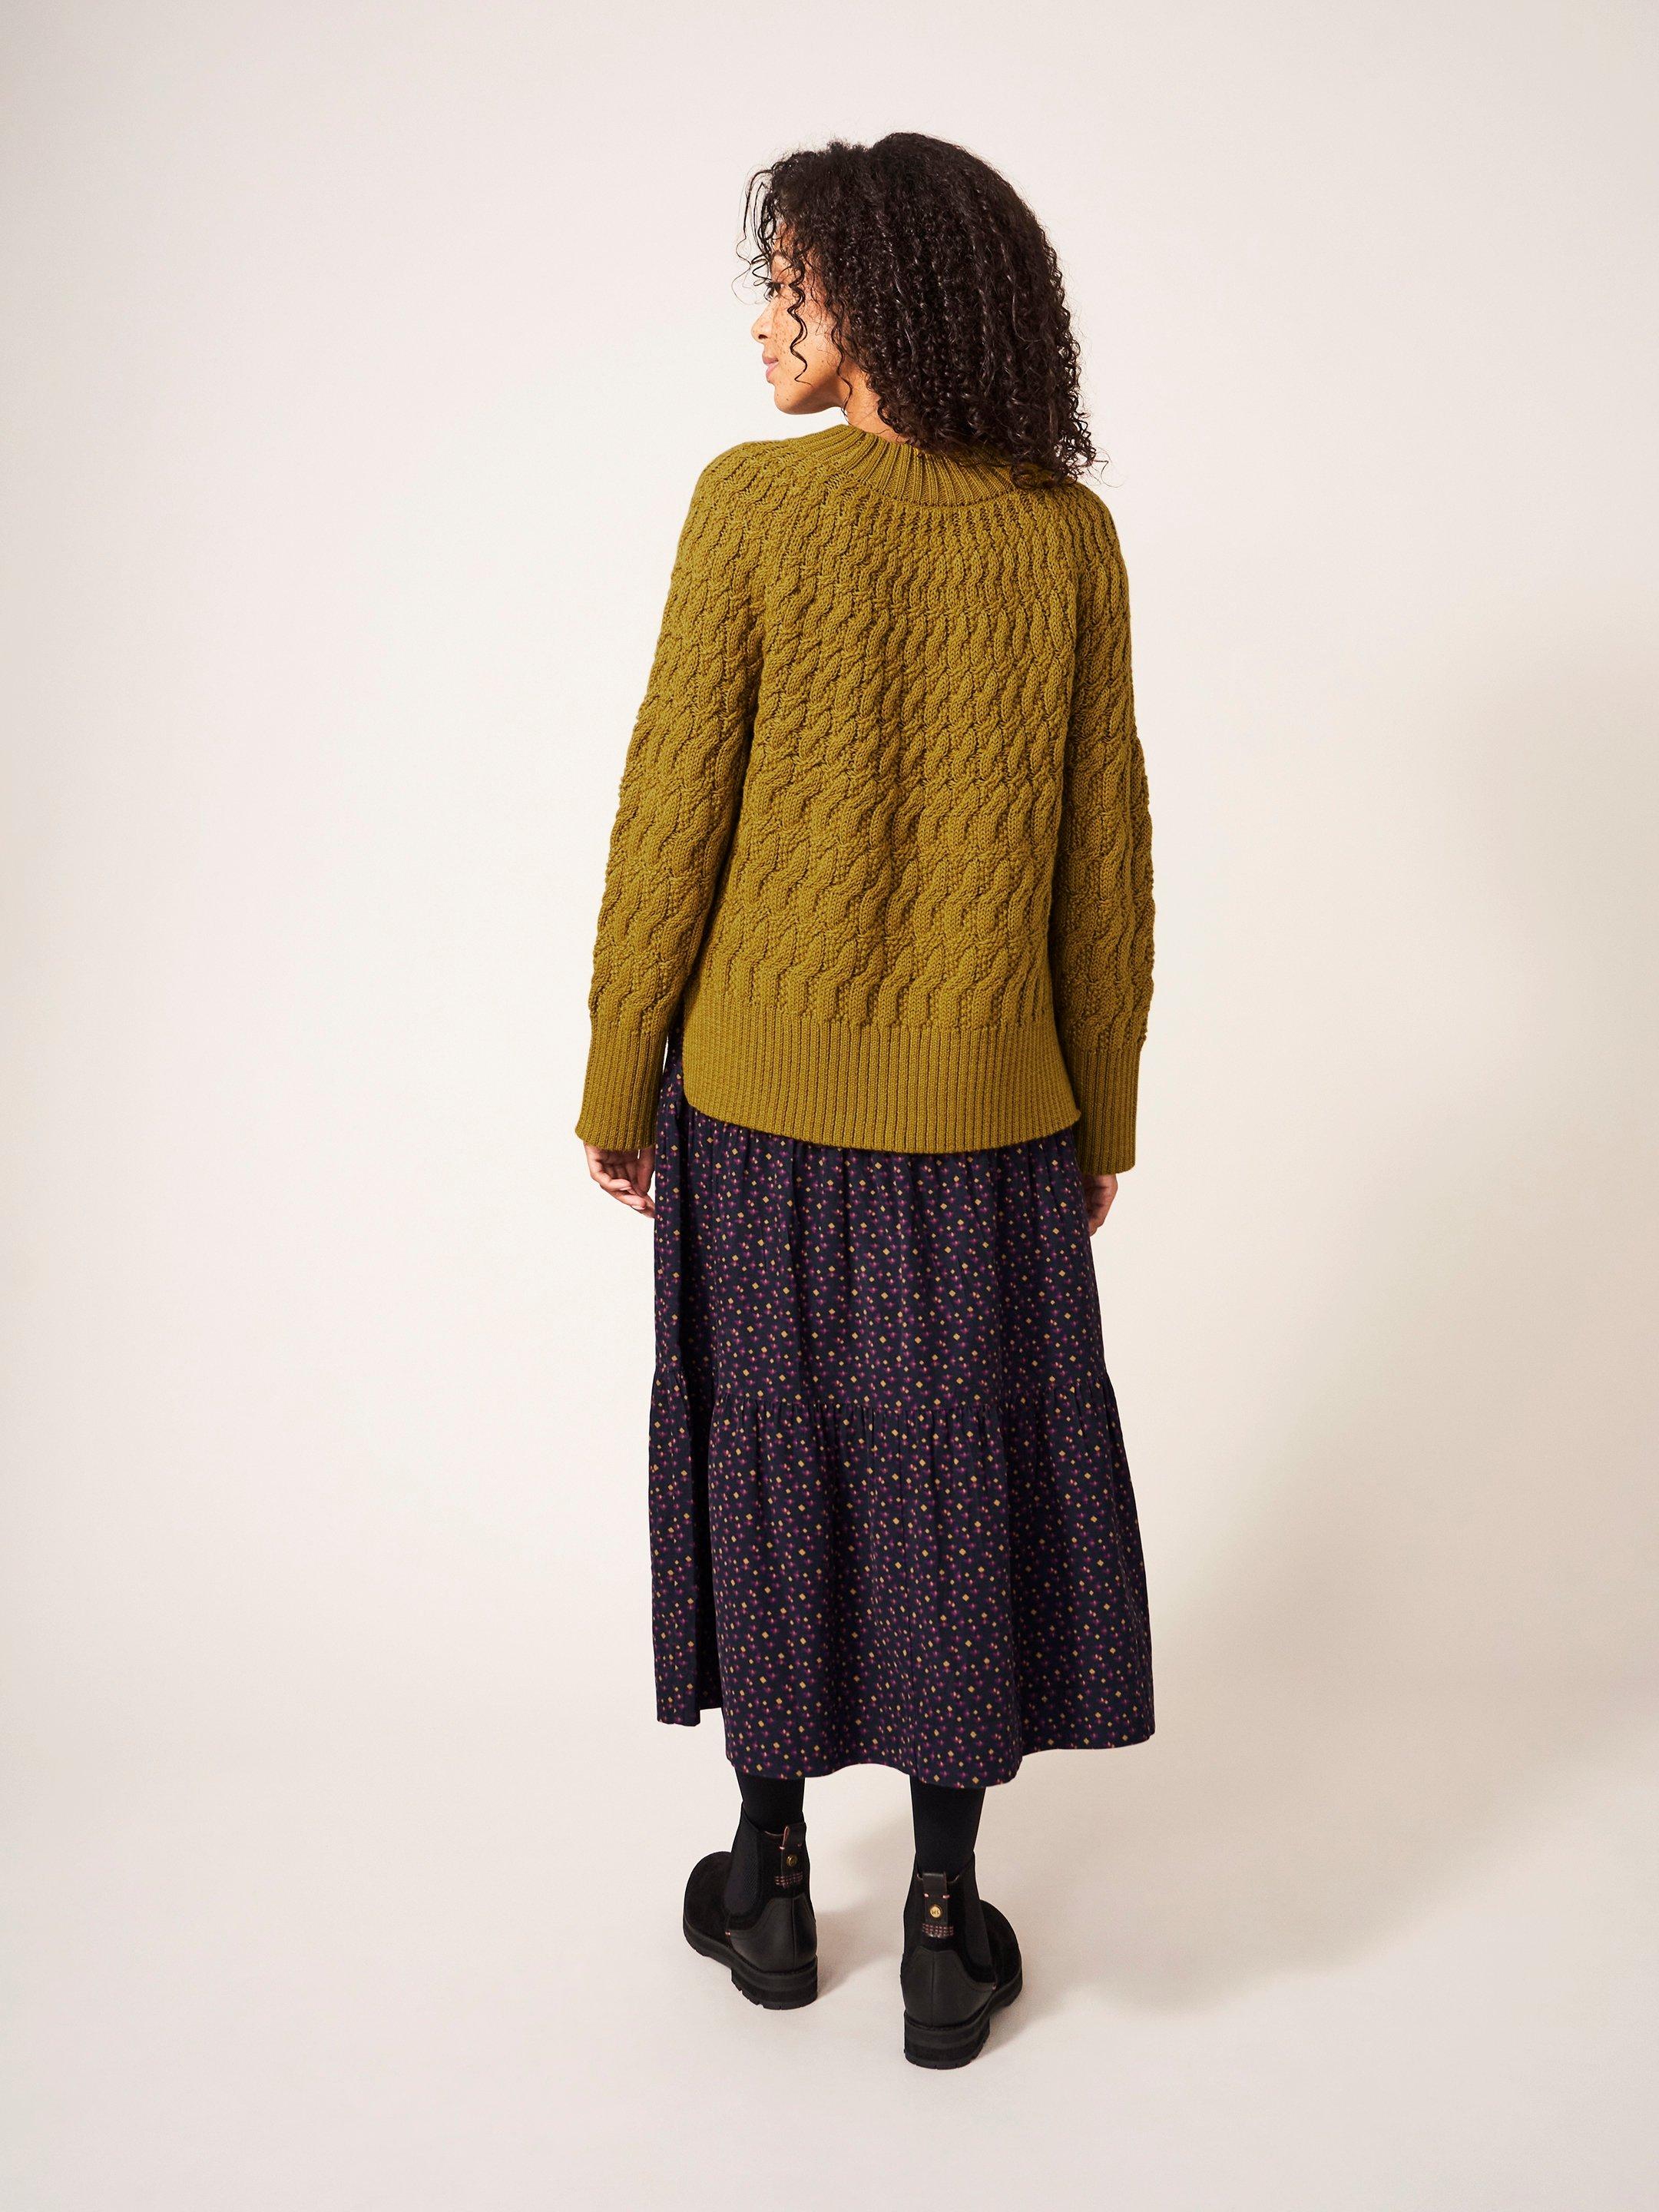 Jade Cord Tiered Skirt in GREY MULTI - MODEL BACK